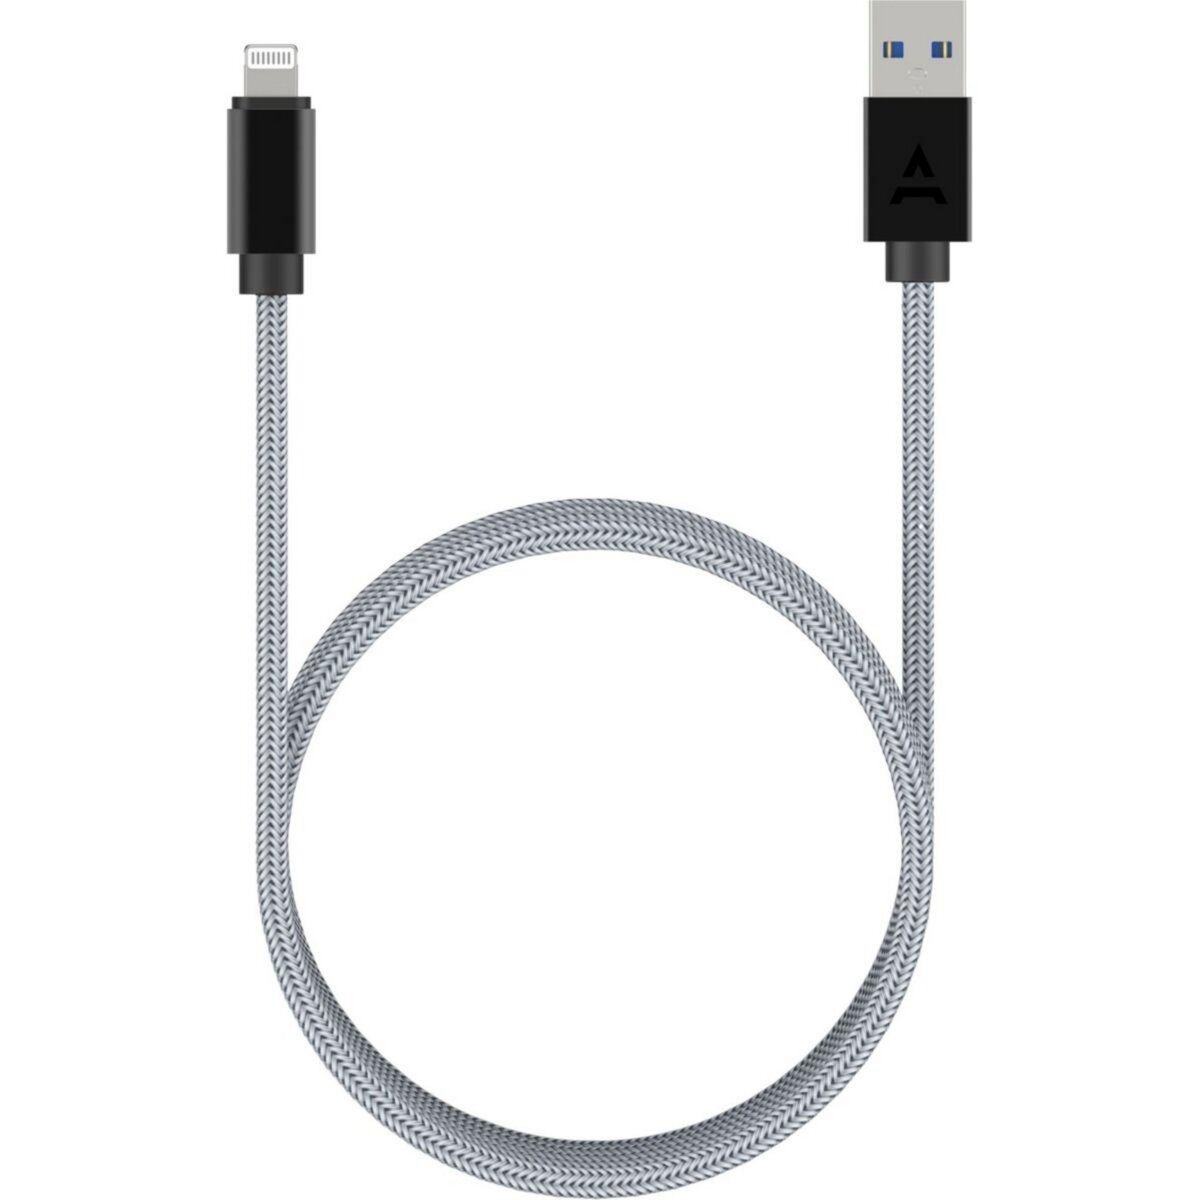 Câble Lightning ESSENTIELB vers USB-C 1m blanc certifié Apple